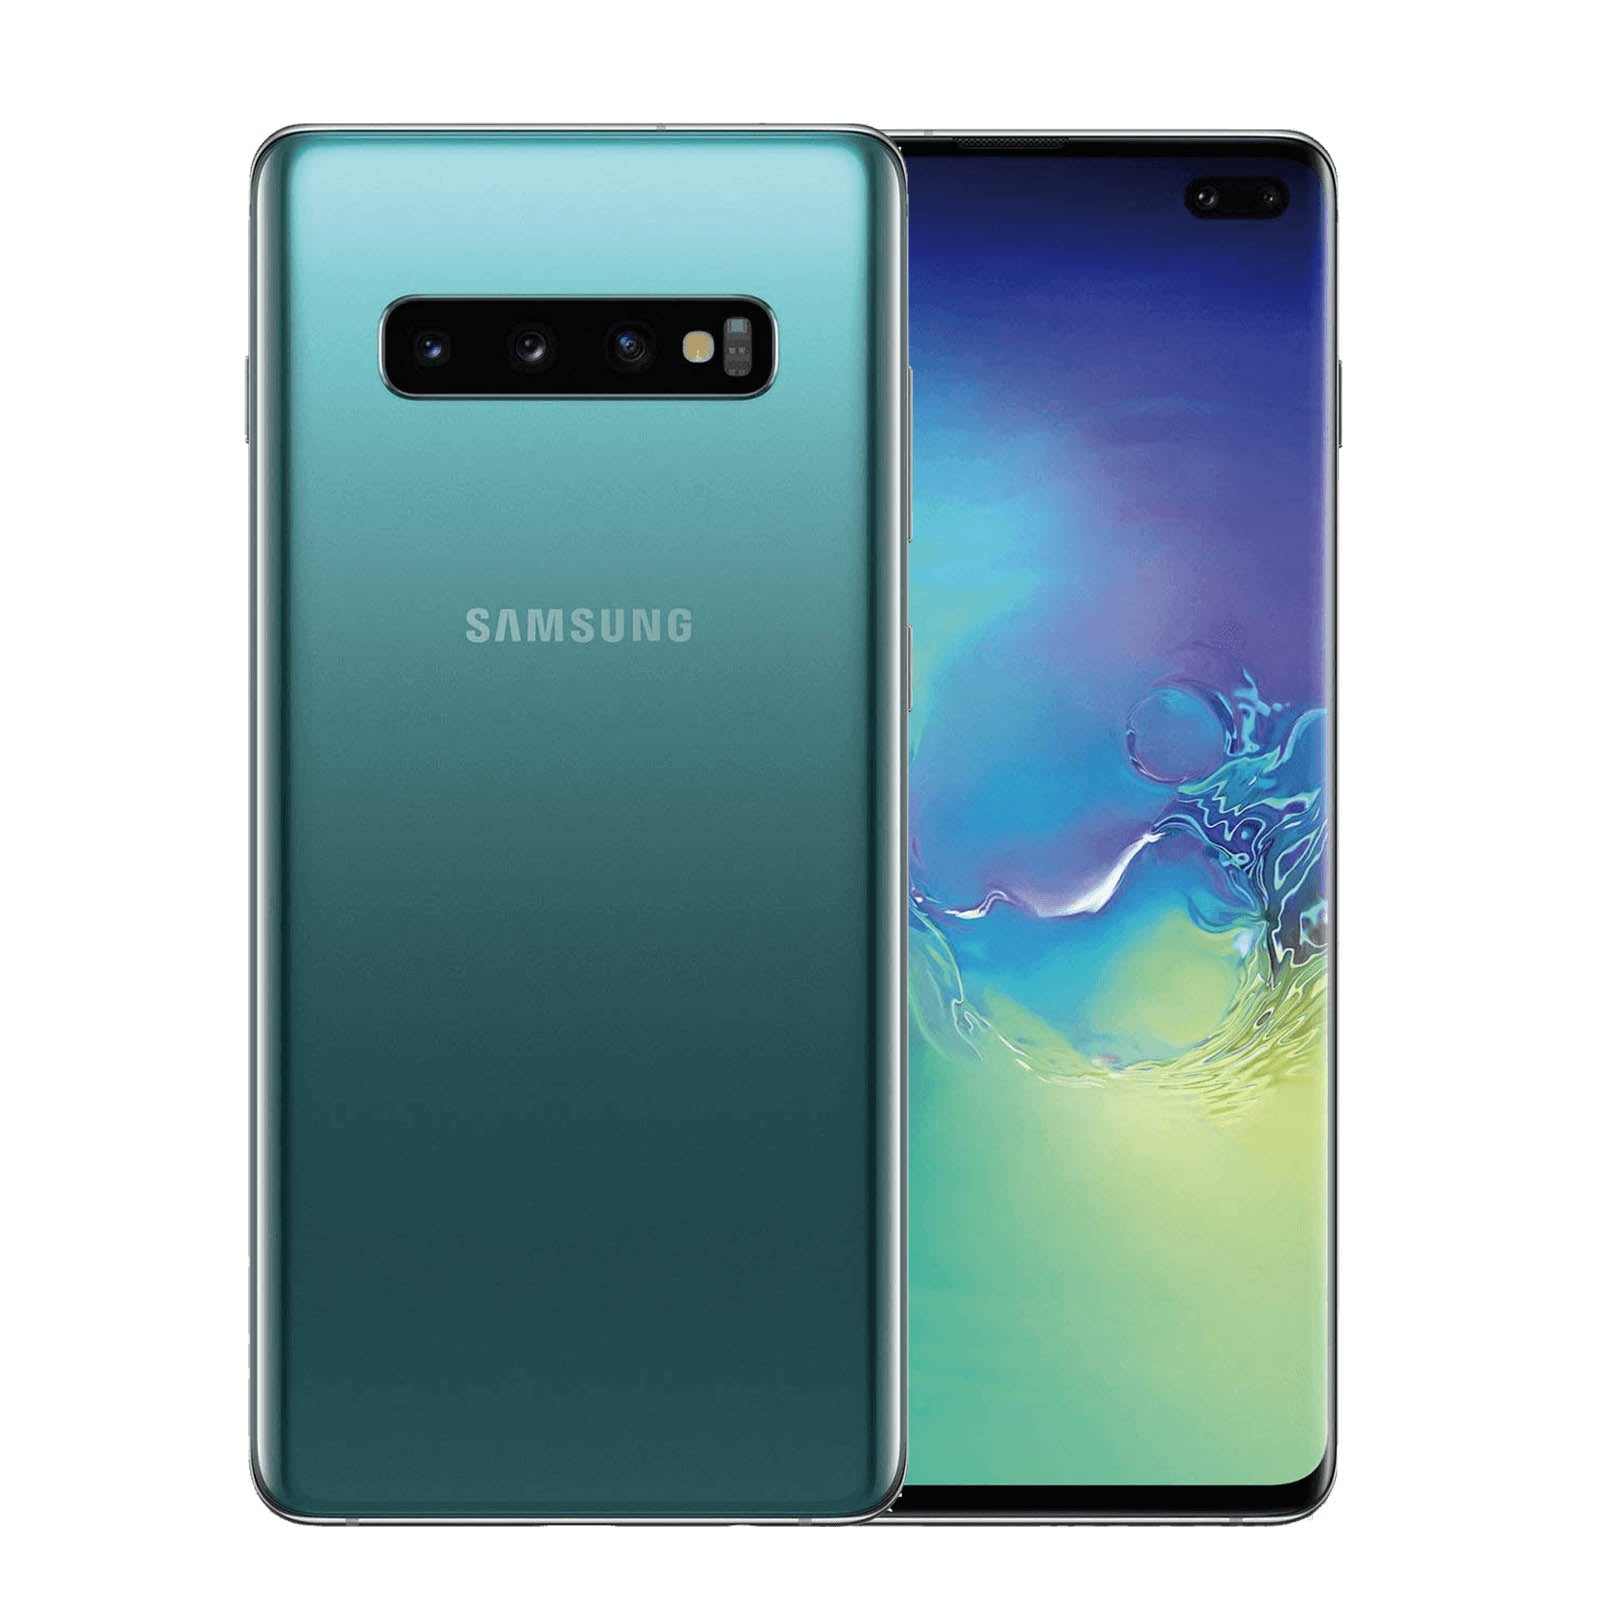 Samsung Galaxy S10 128GB Prism Green Good - Unlocked